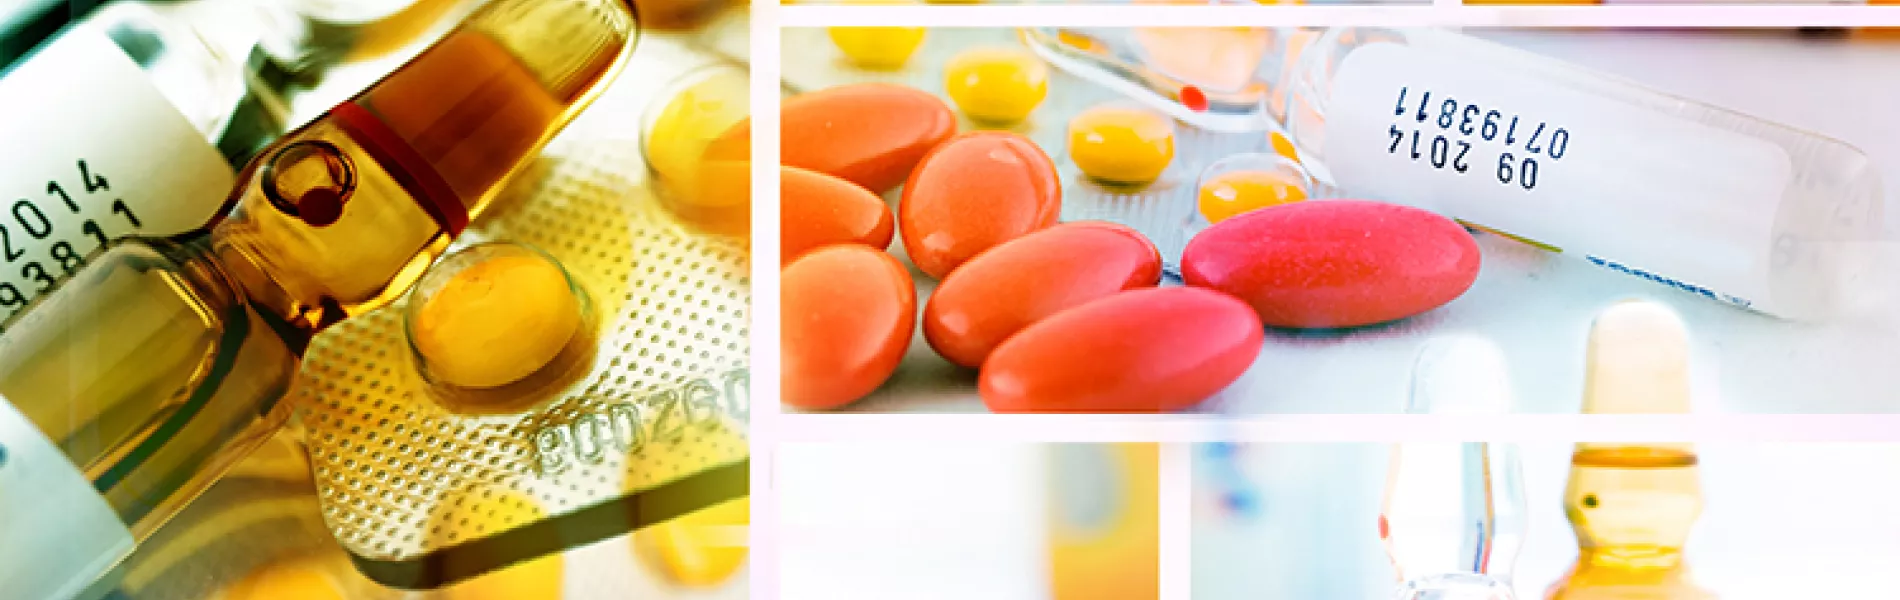 Digital Labels Revolutionize Investigational Medicinal Products (IMPs)